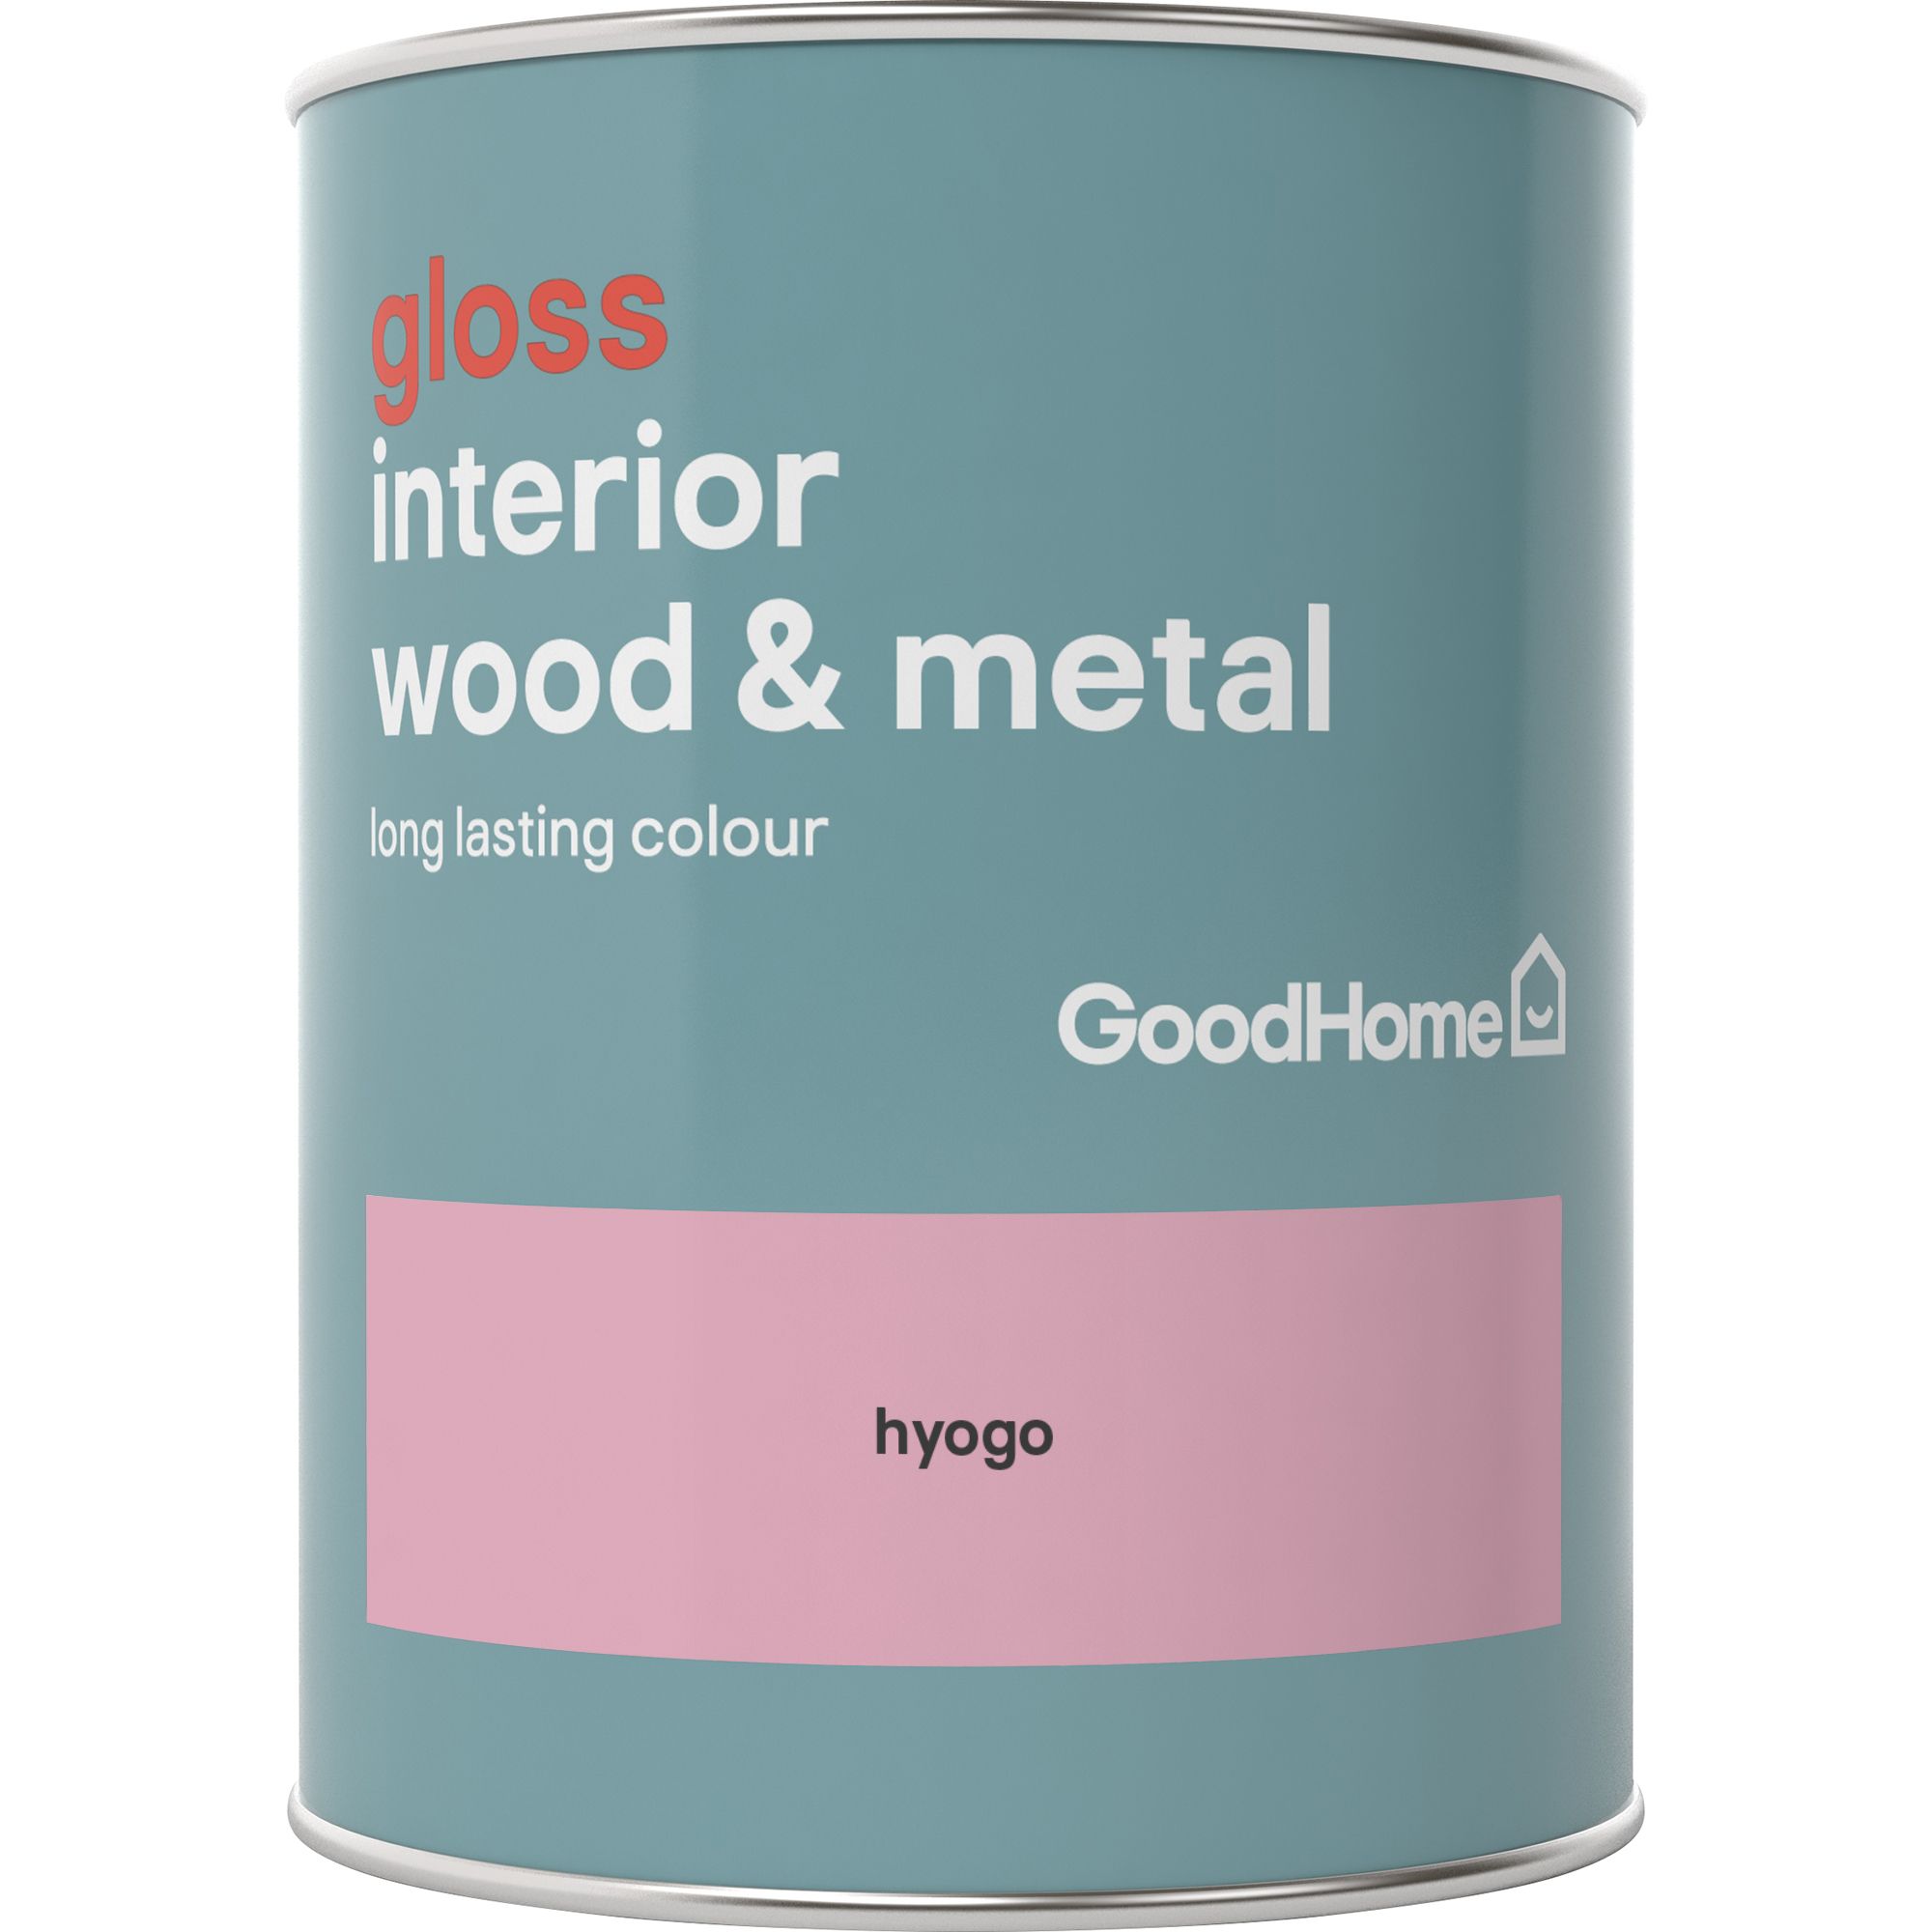 GoodHome Hyogo Gloss Metal & wood paint, 750ml